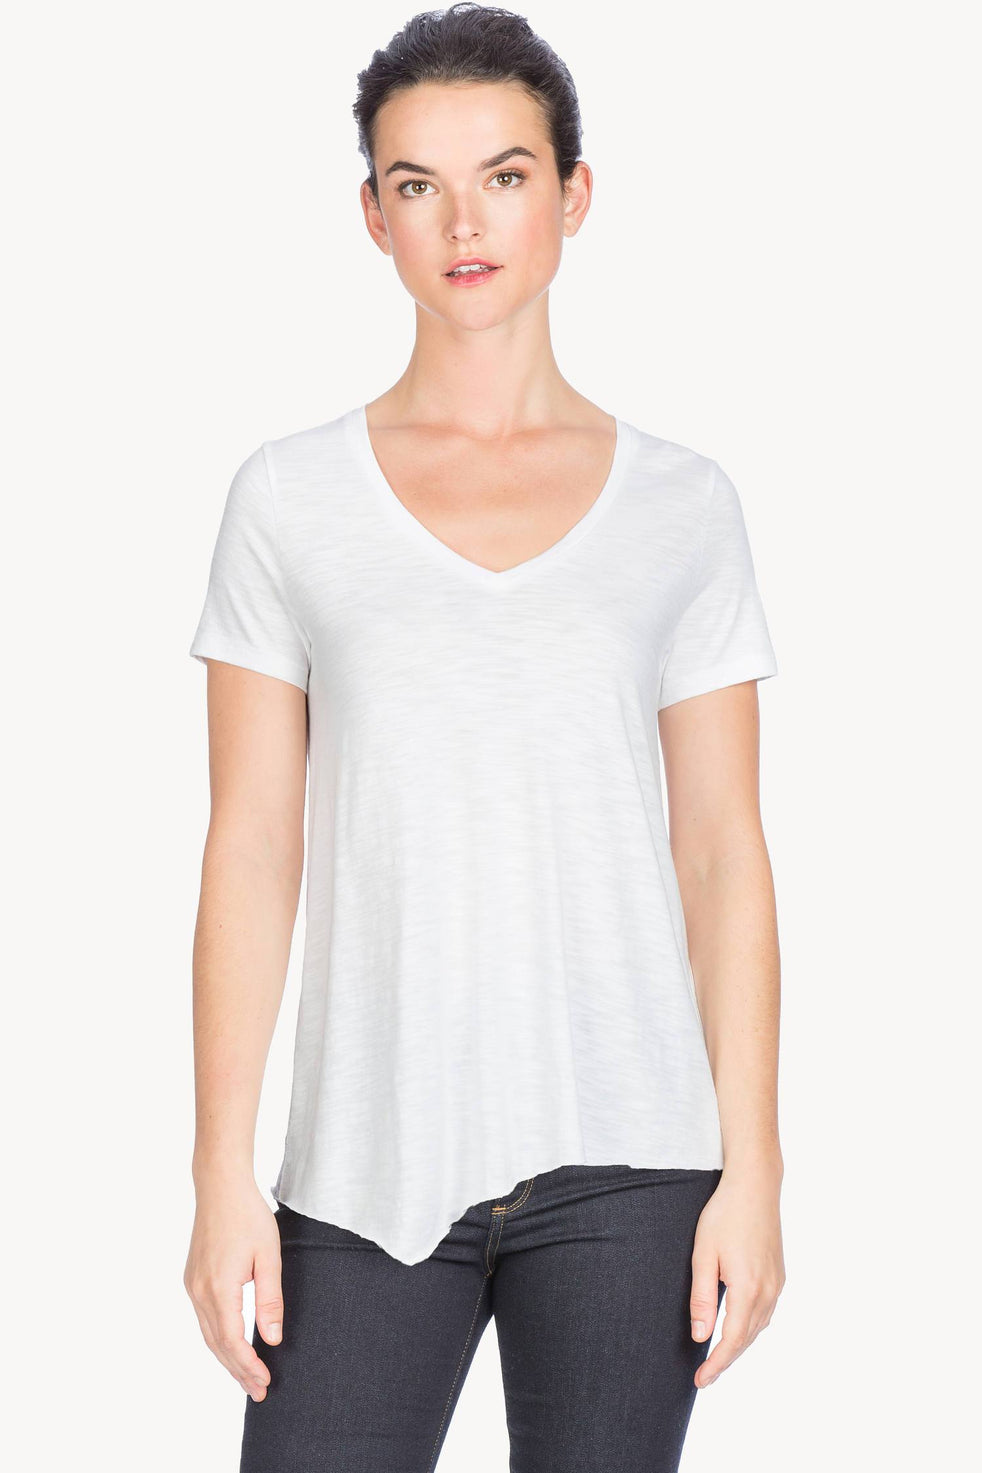 Women\'s Tops Cotton Sleeve & on Long for Shirts | Women Sale Short